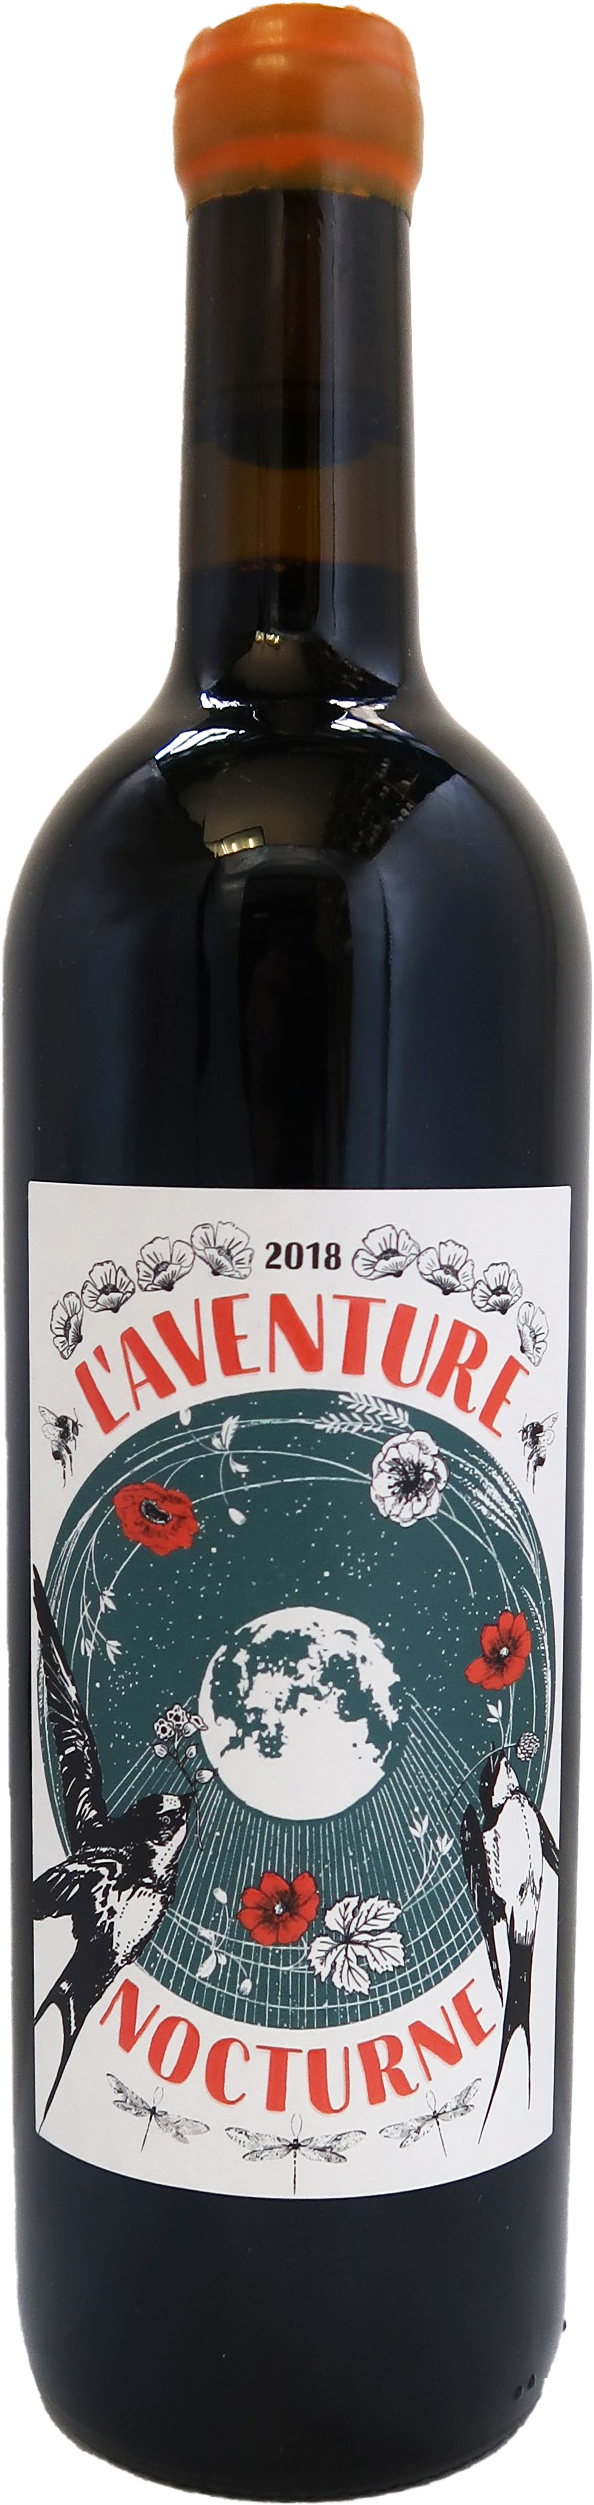 L'Nocturnal Adventure 2018 - Charivari Wines